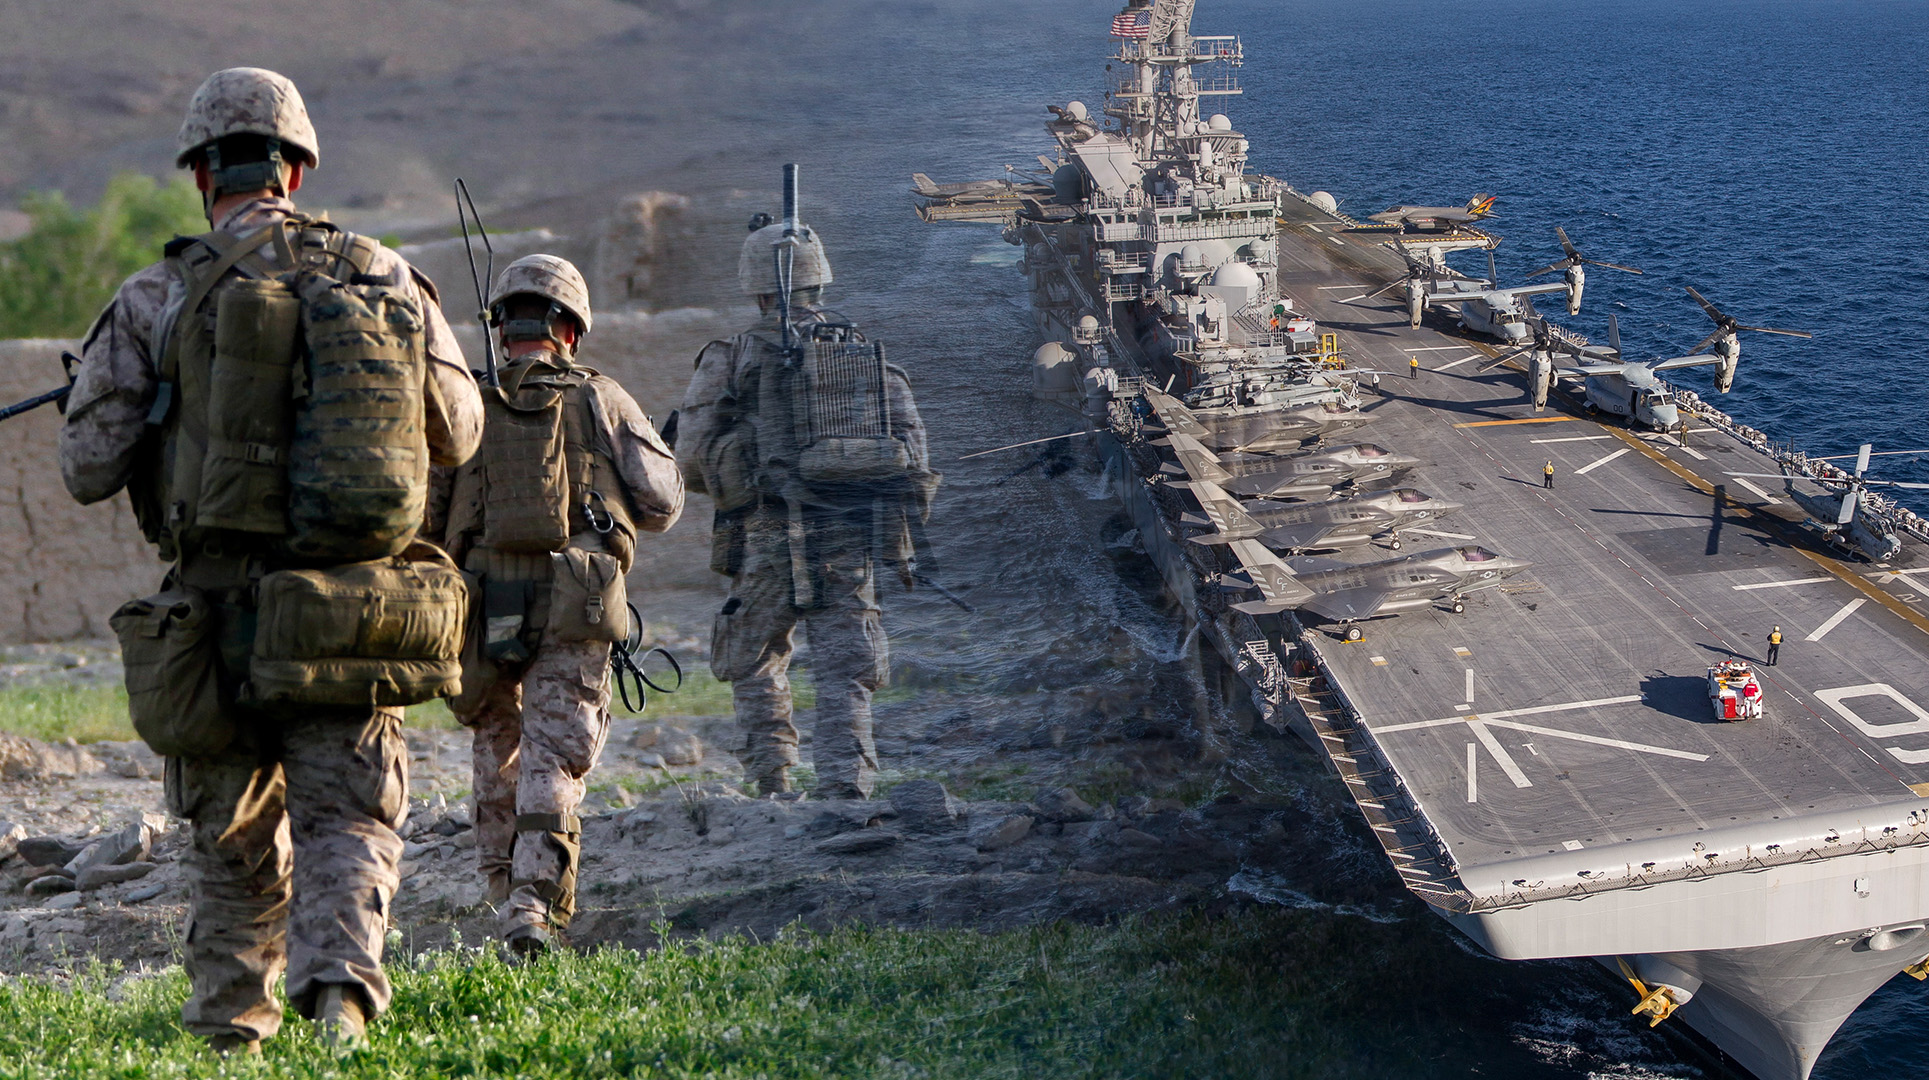 Navy will name its next assault ship ‘USS Helmand Province’ to honor fierce Marine battlefields